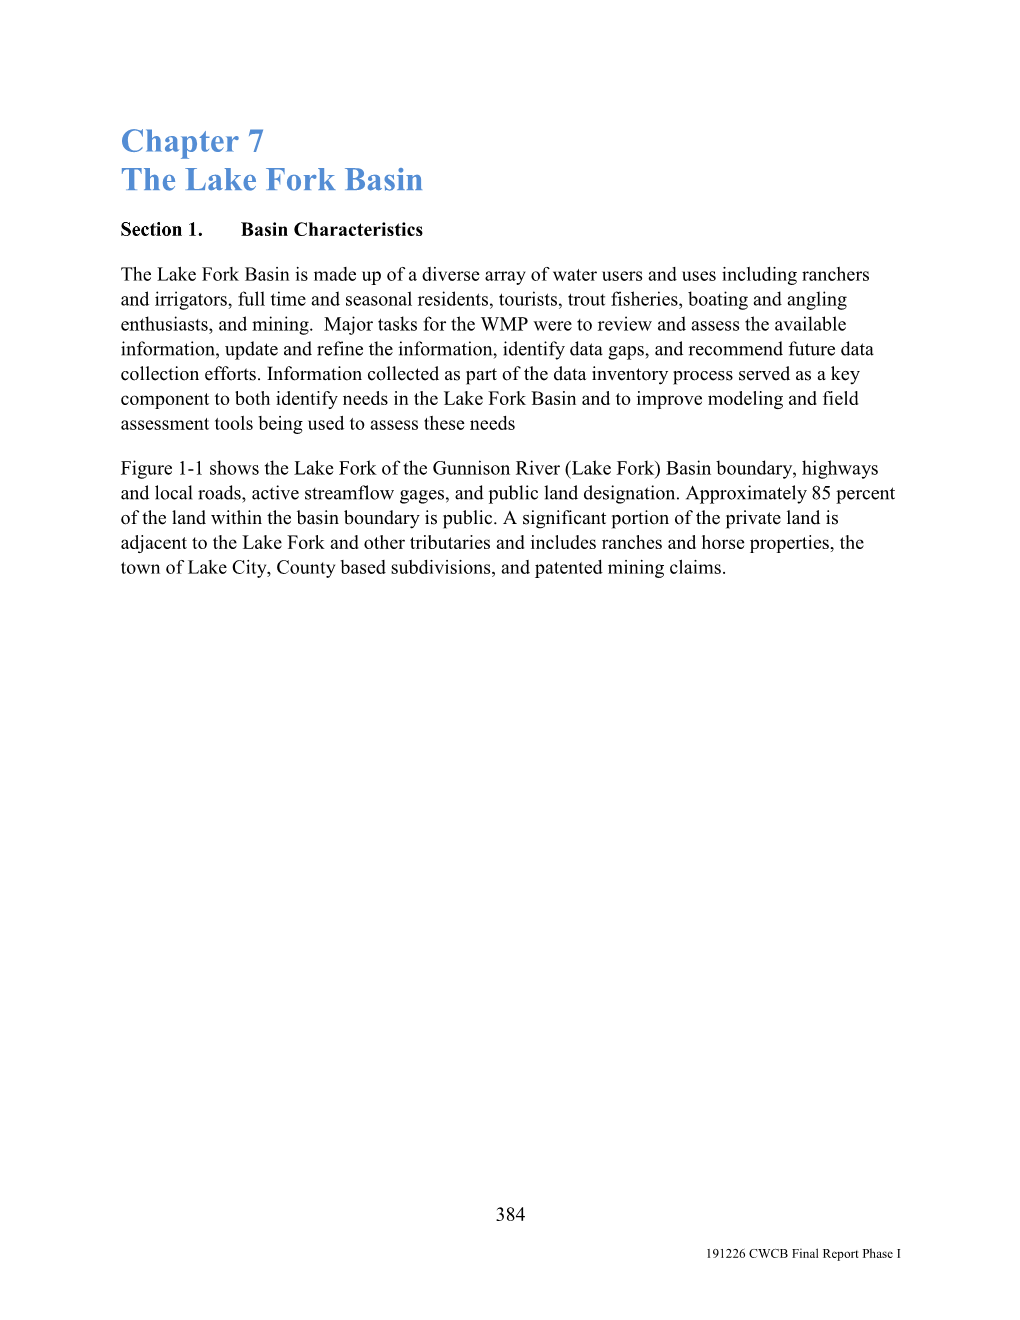 Chapter 7 the Lake Fork Basin